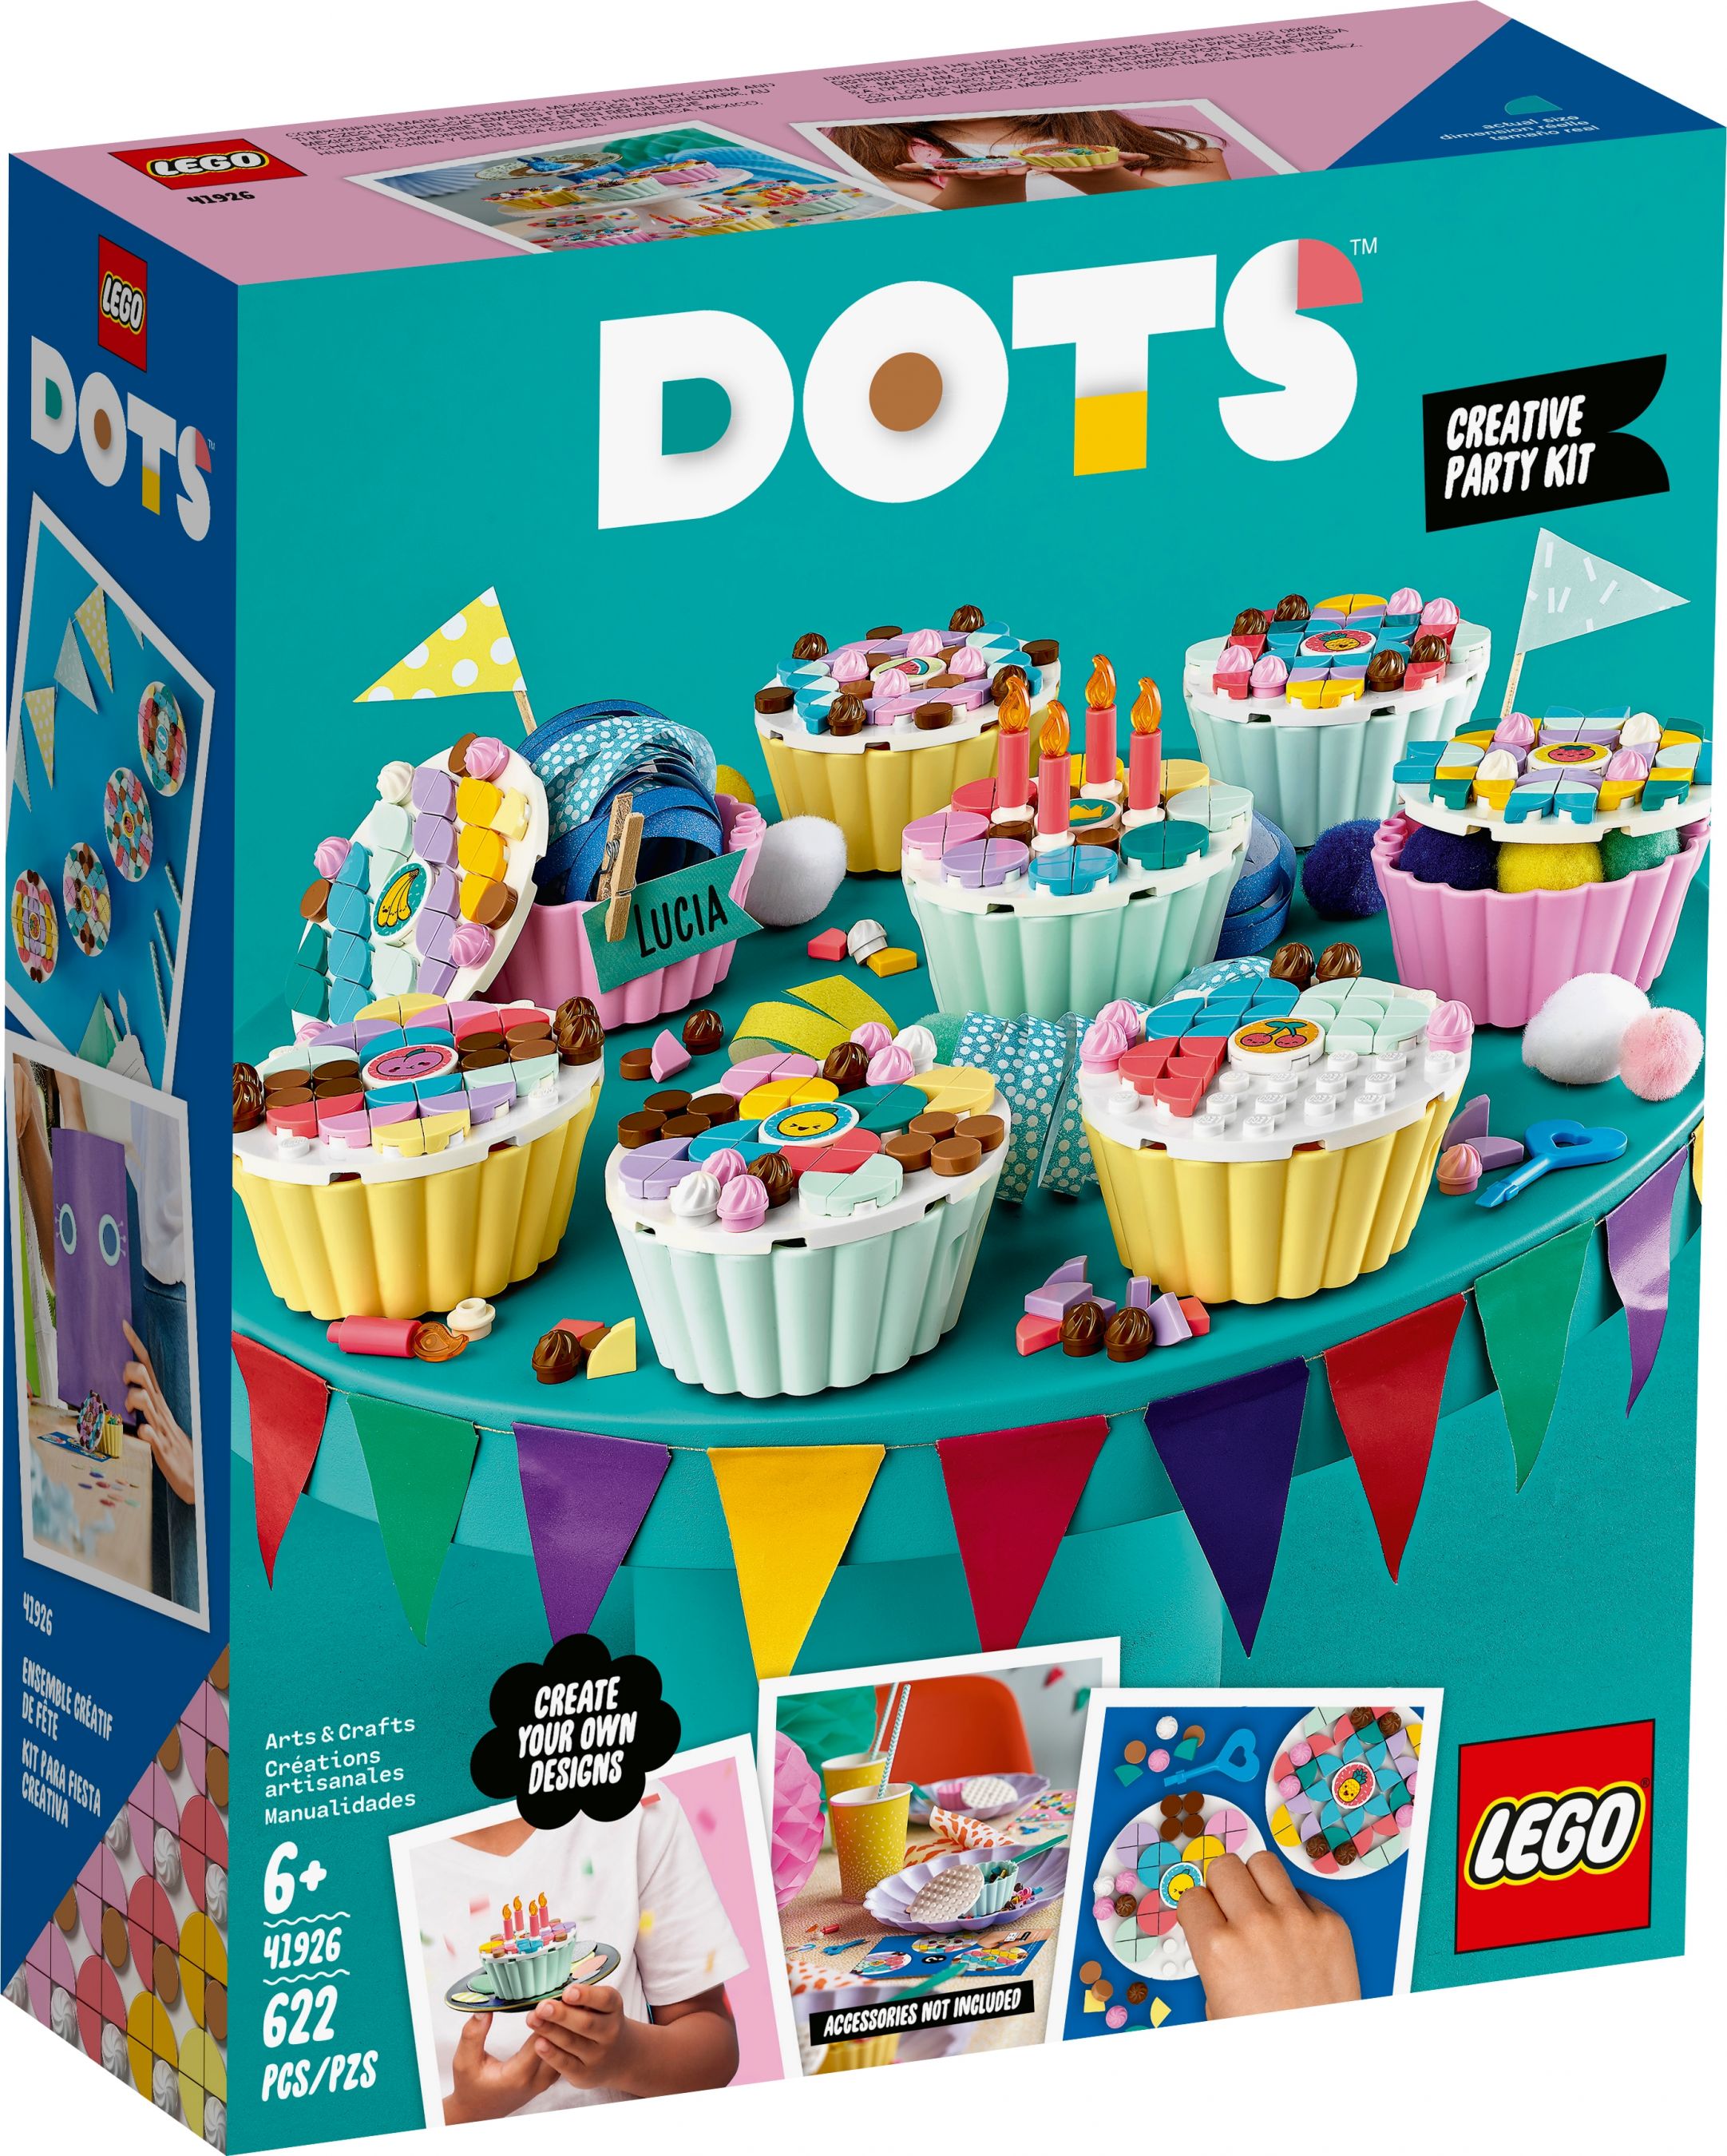 LEGO Dots 41926 Cupcake Partyset LEGO_41926_alt1.jpg